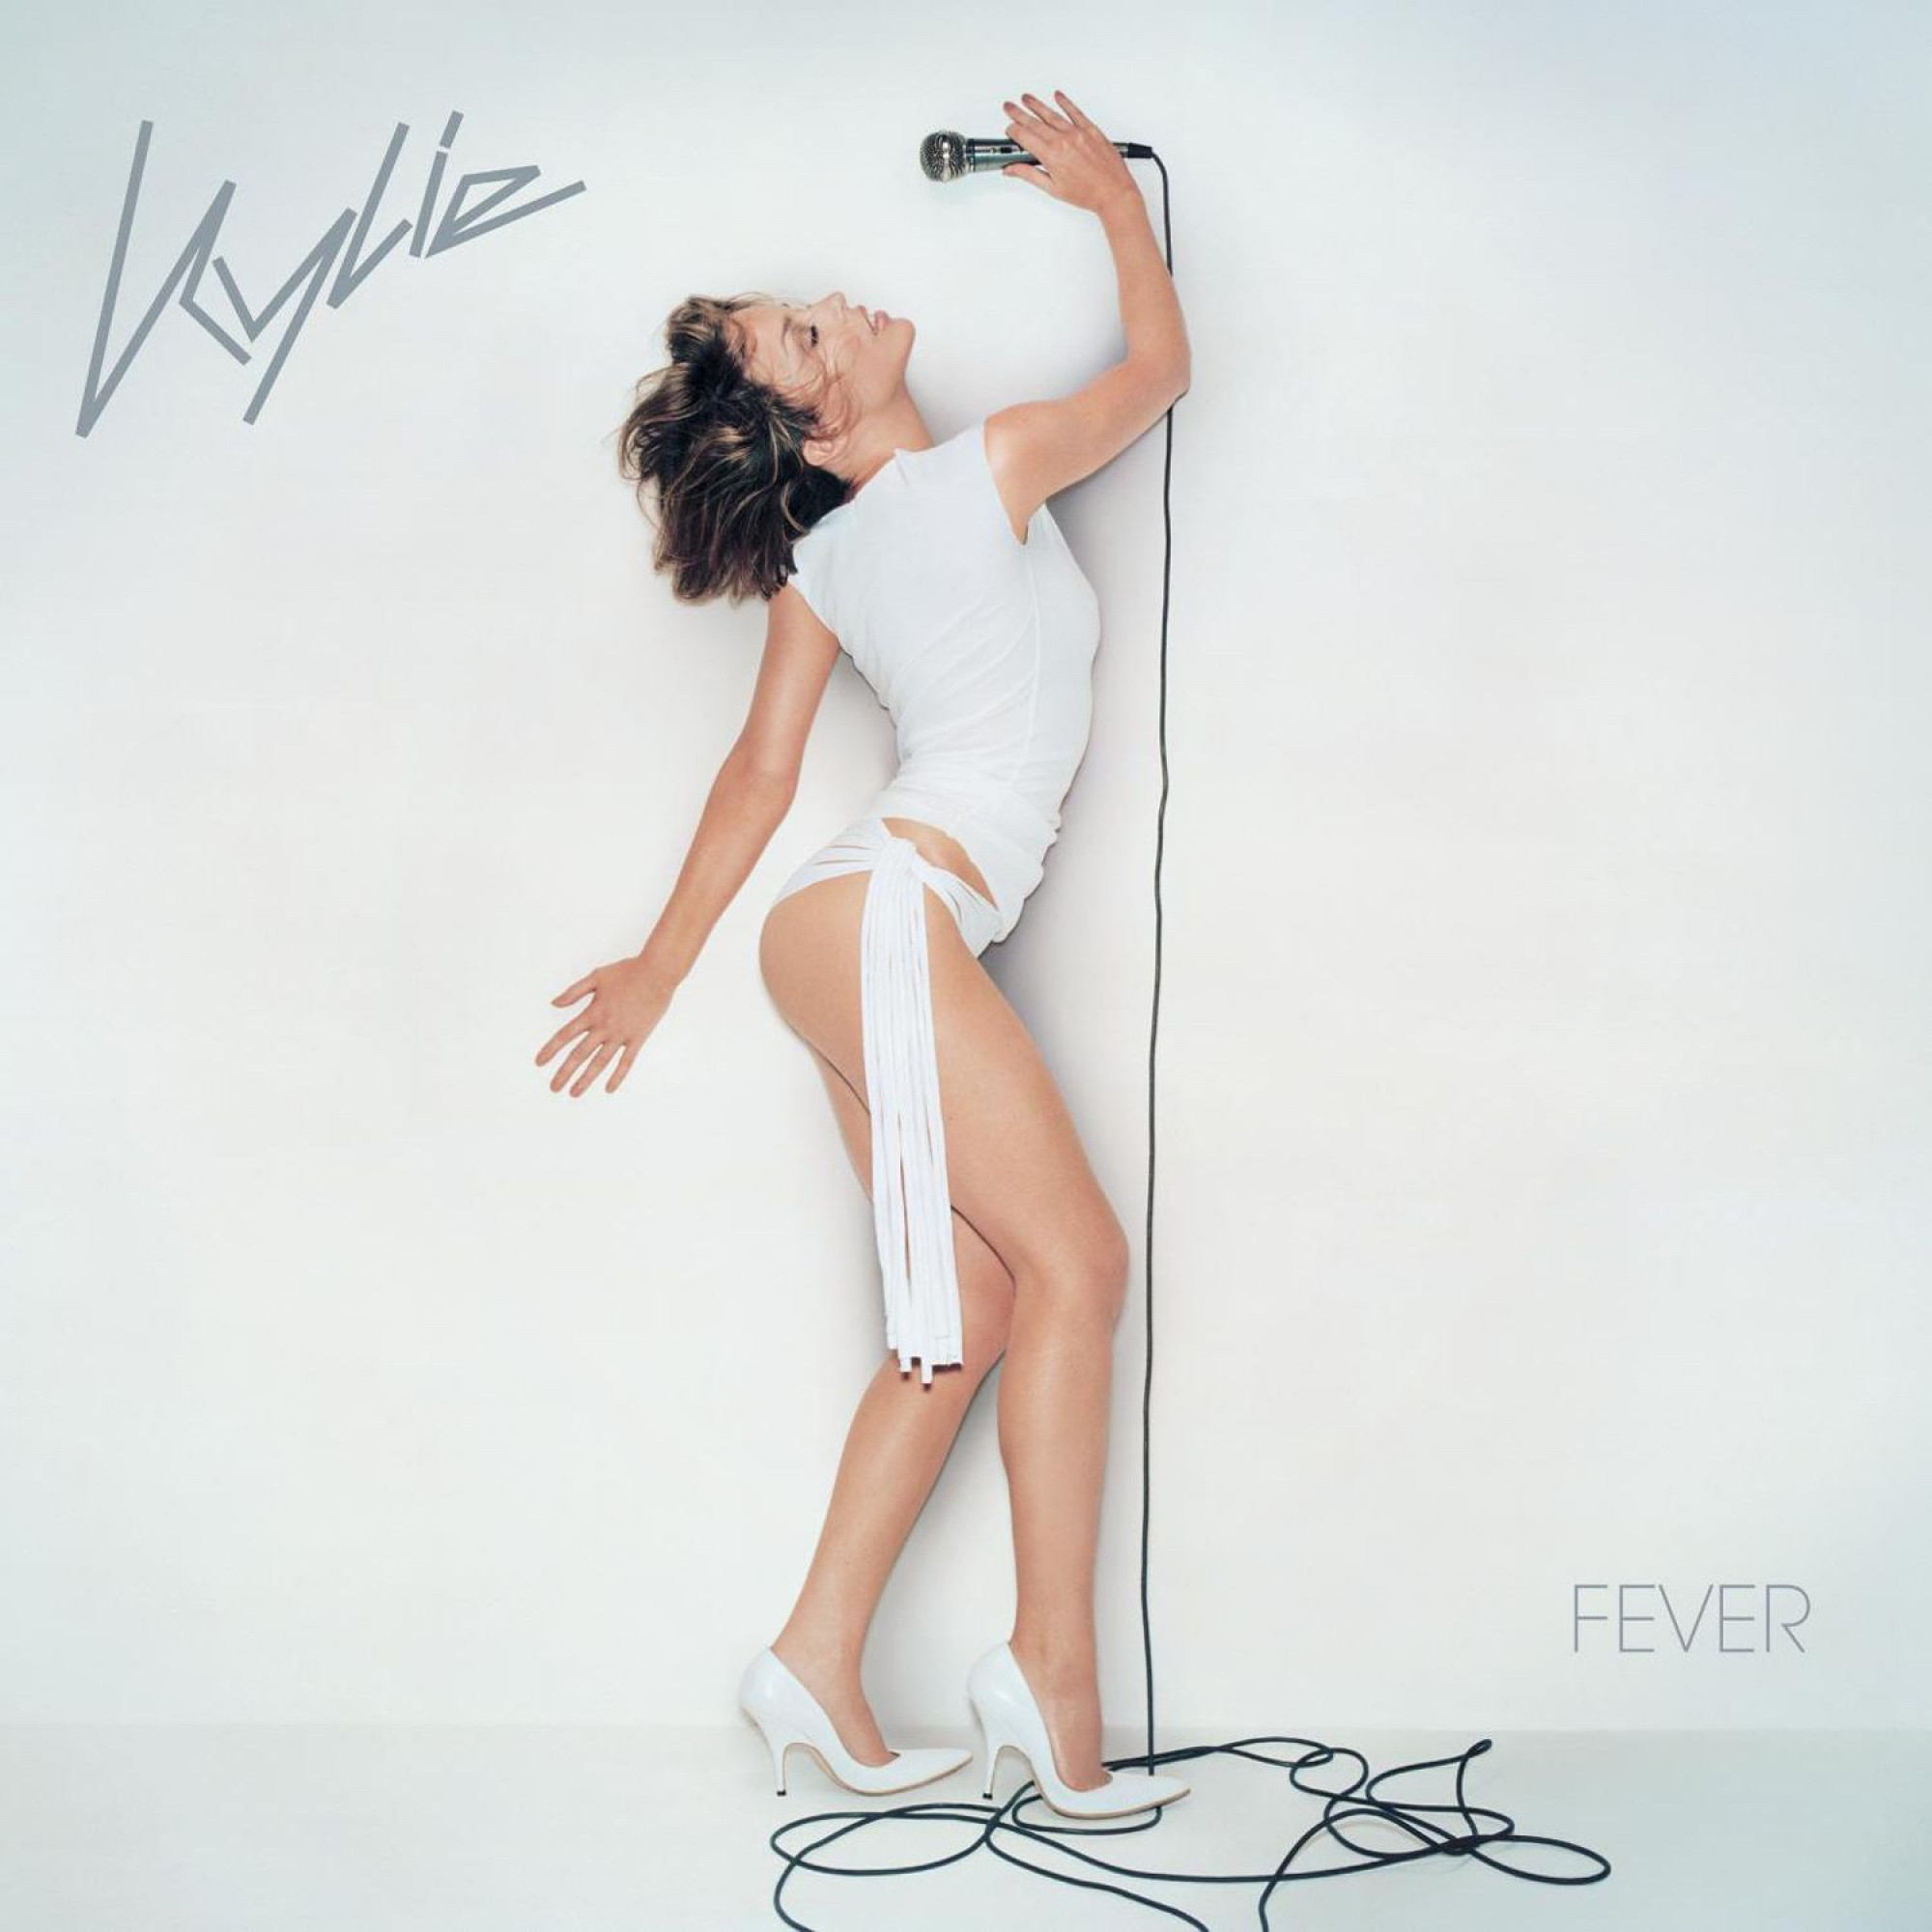 Vinyl, Kylie Minogue